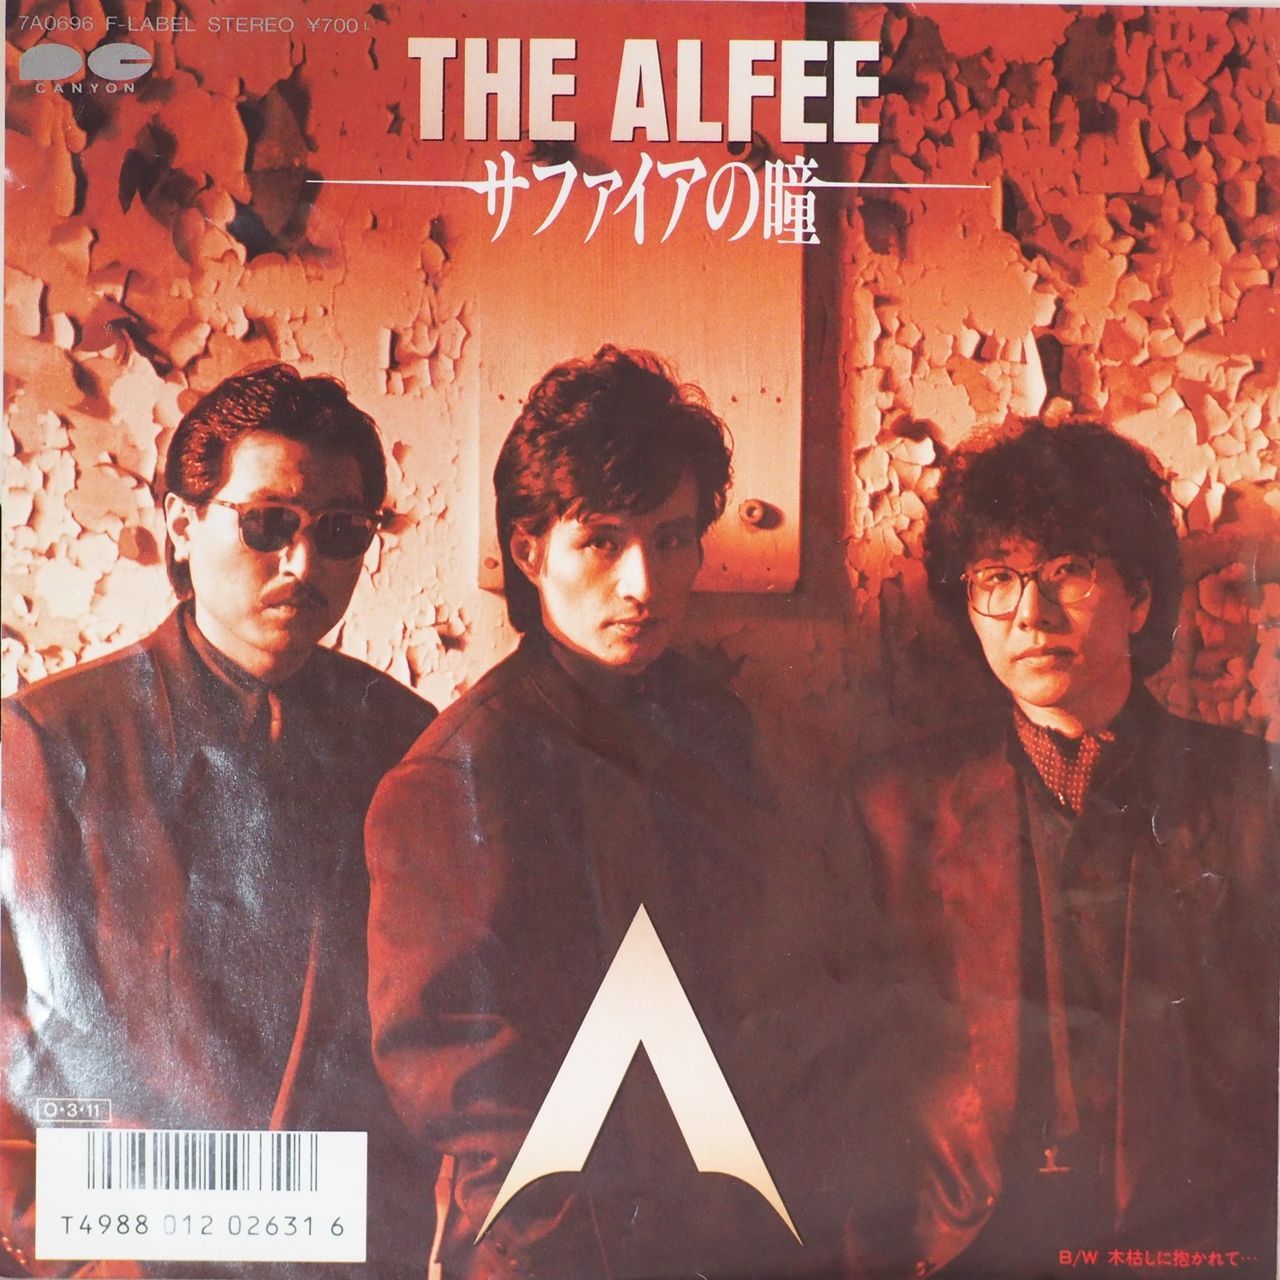 THE ALFEE シングルCD 26枚セット - 邦楽